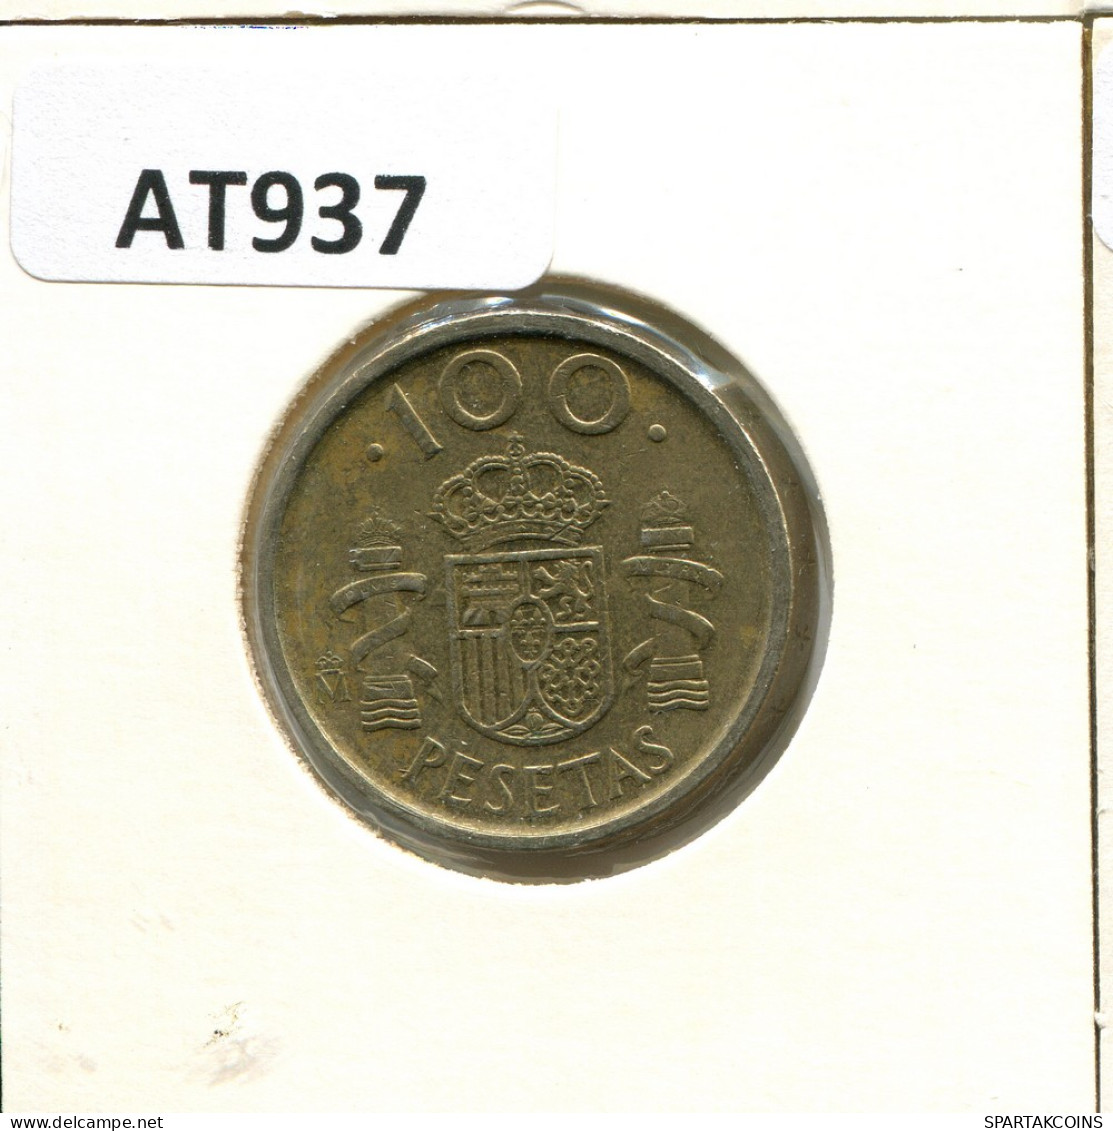 100 PESETAS 1992 SPAIN Coin #AT937.U - 100 Pesetas